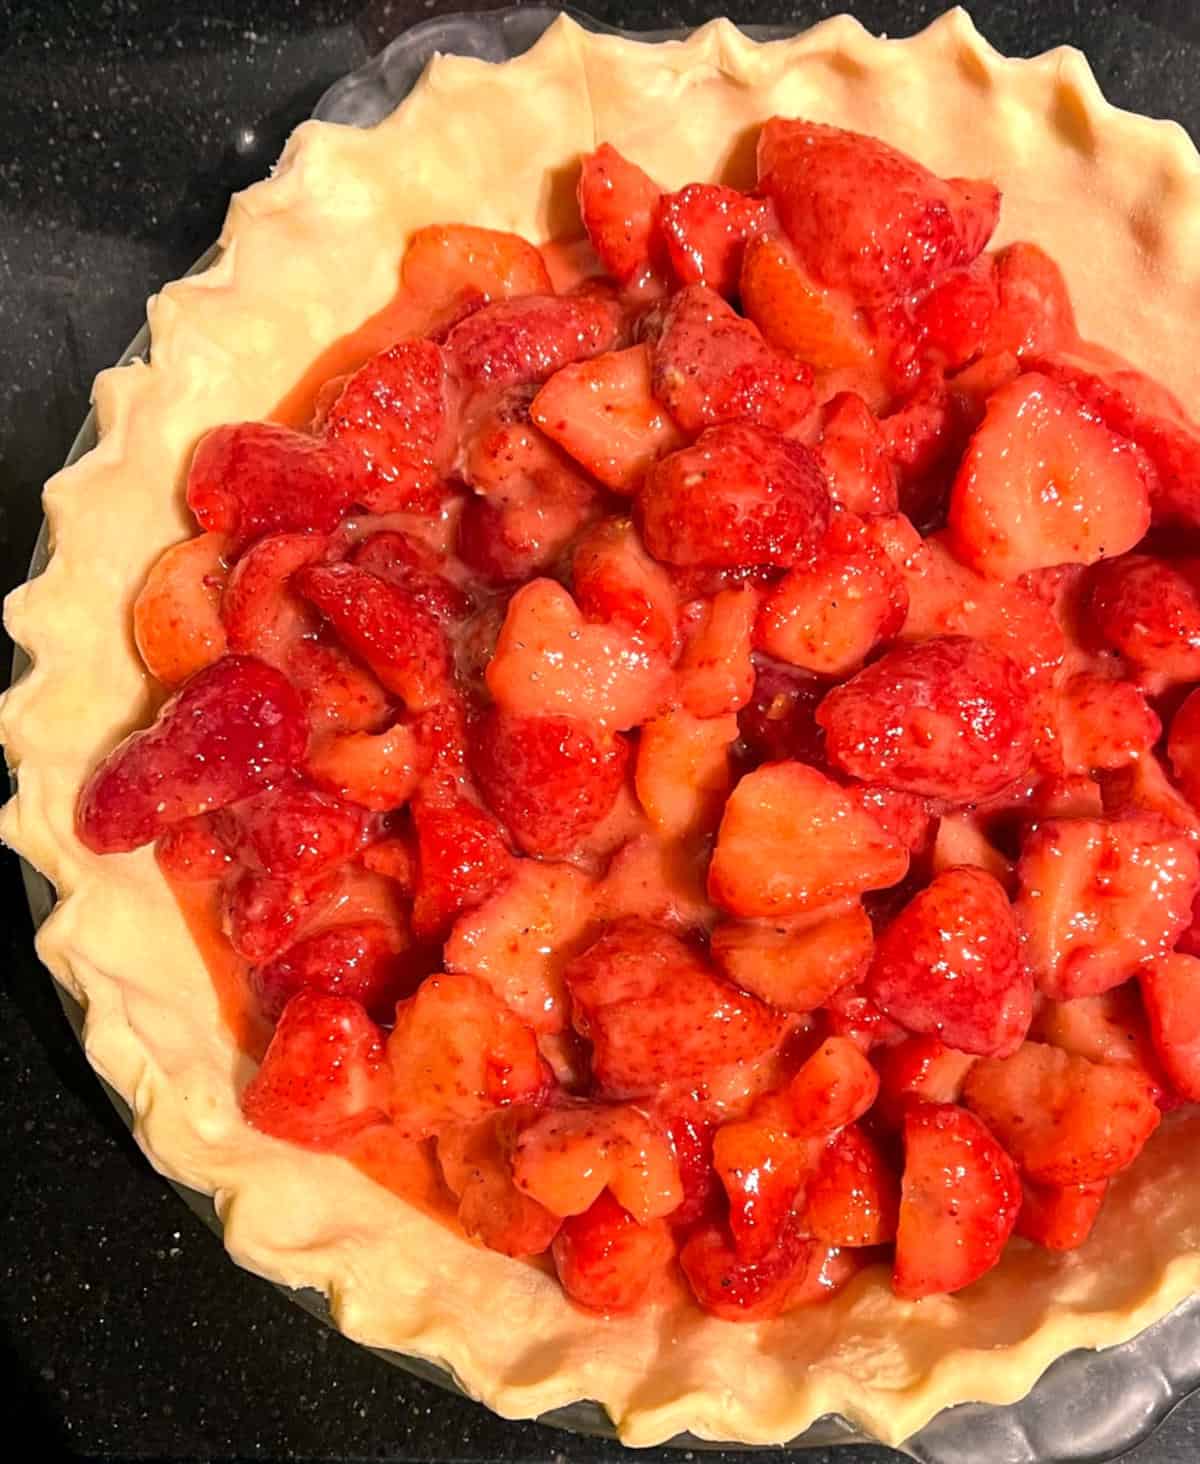 Strawberry filling in vegan pie crust.